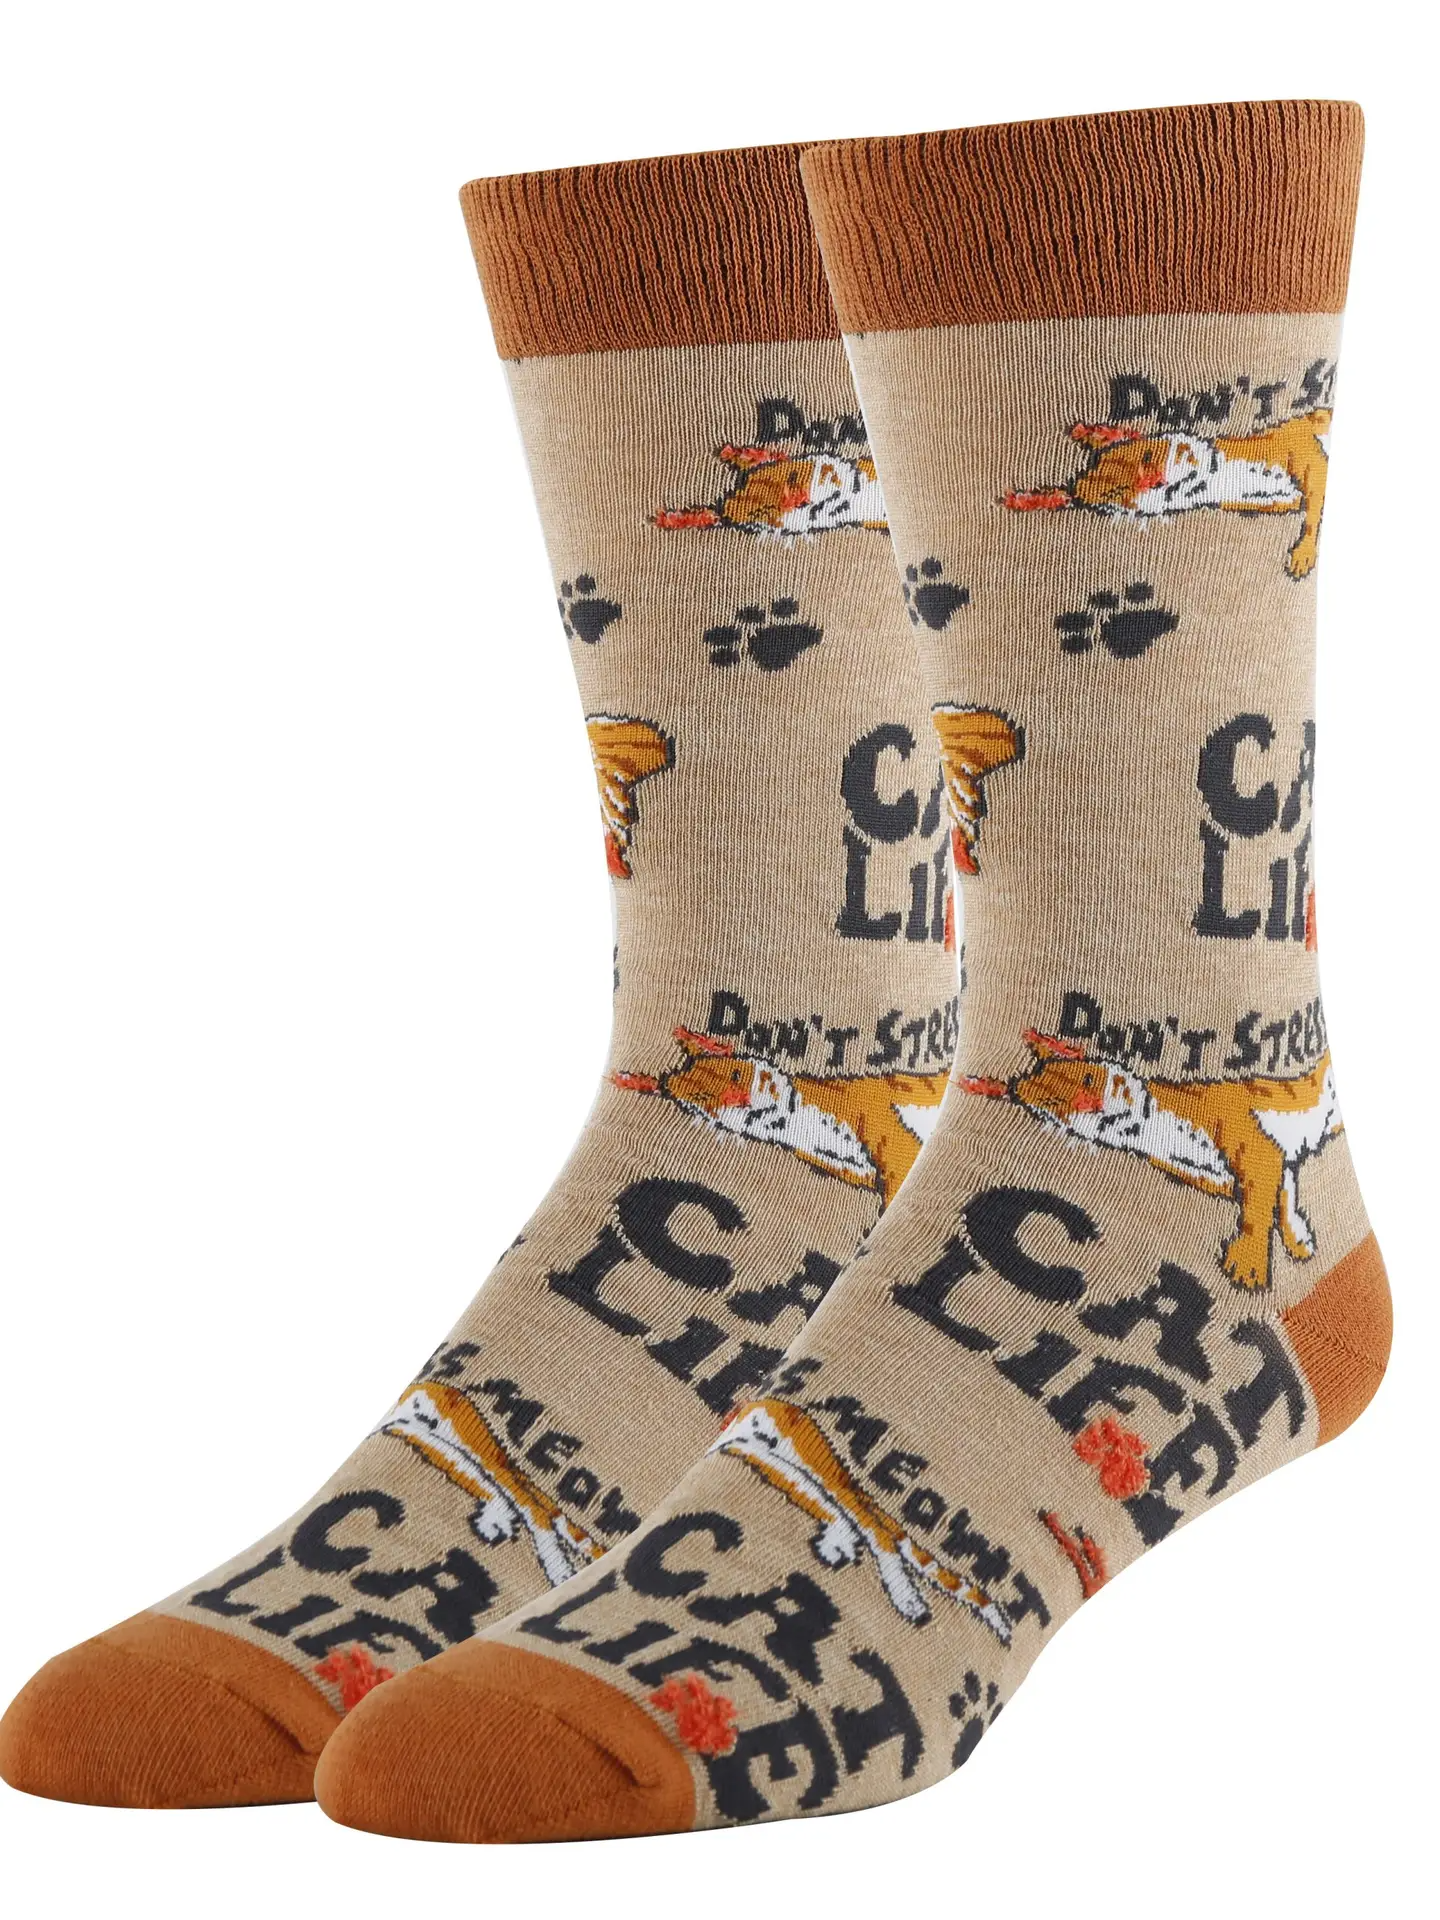 Cat Life - Men's Socks